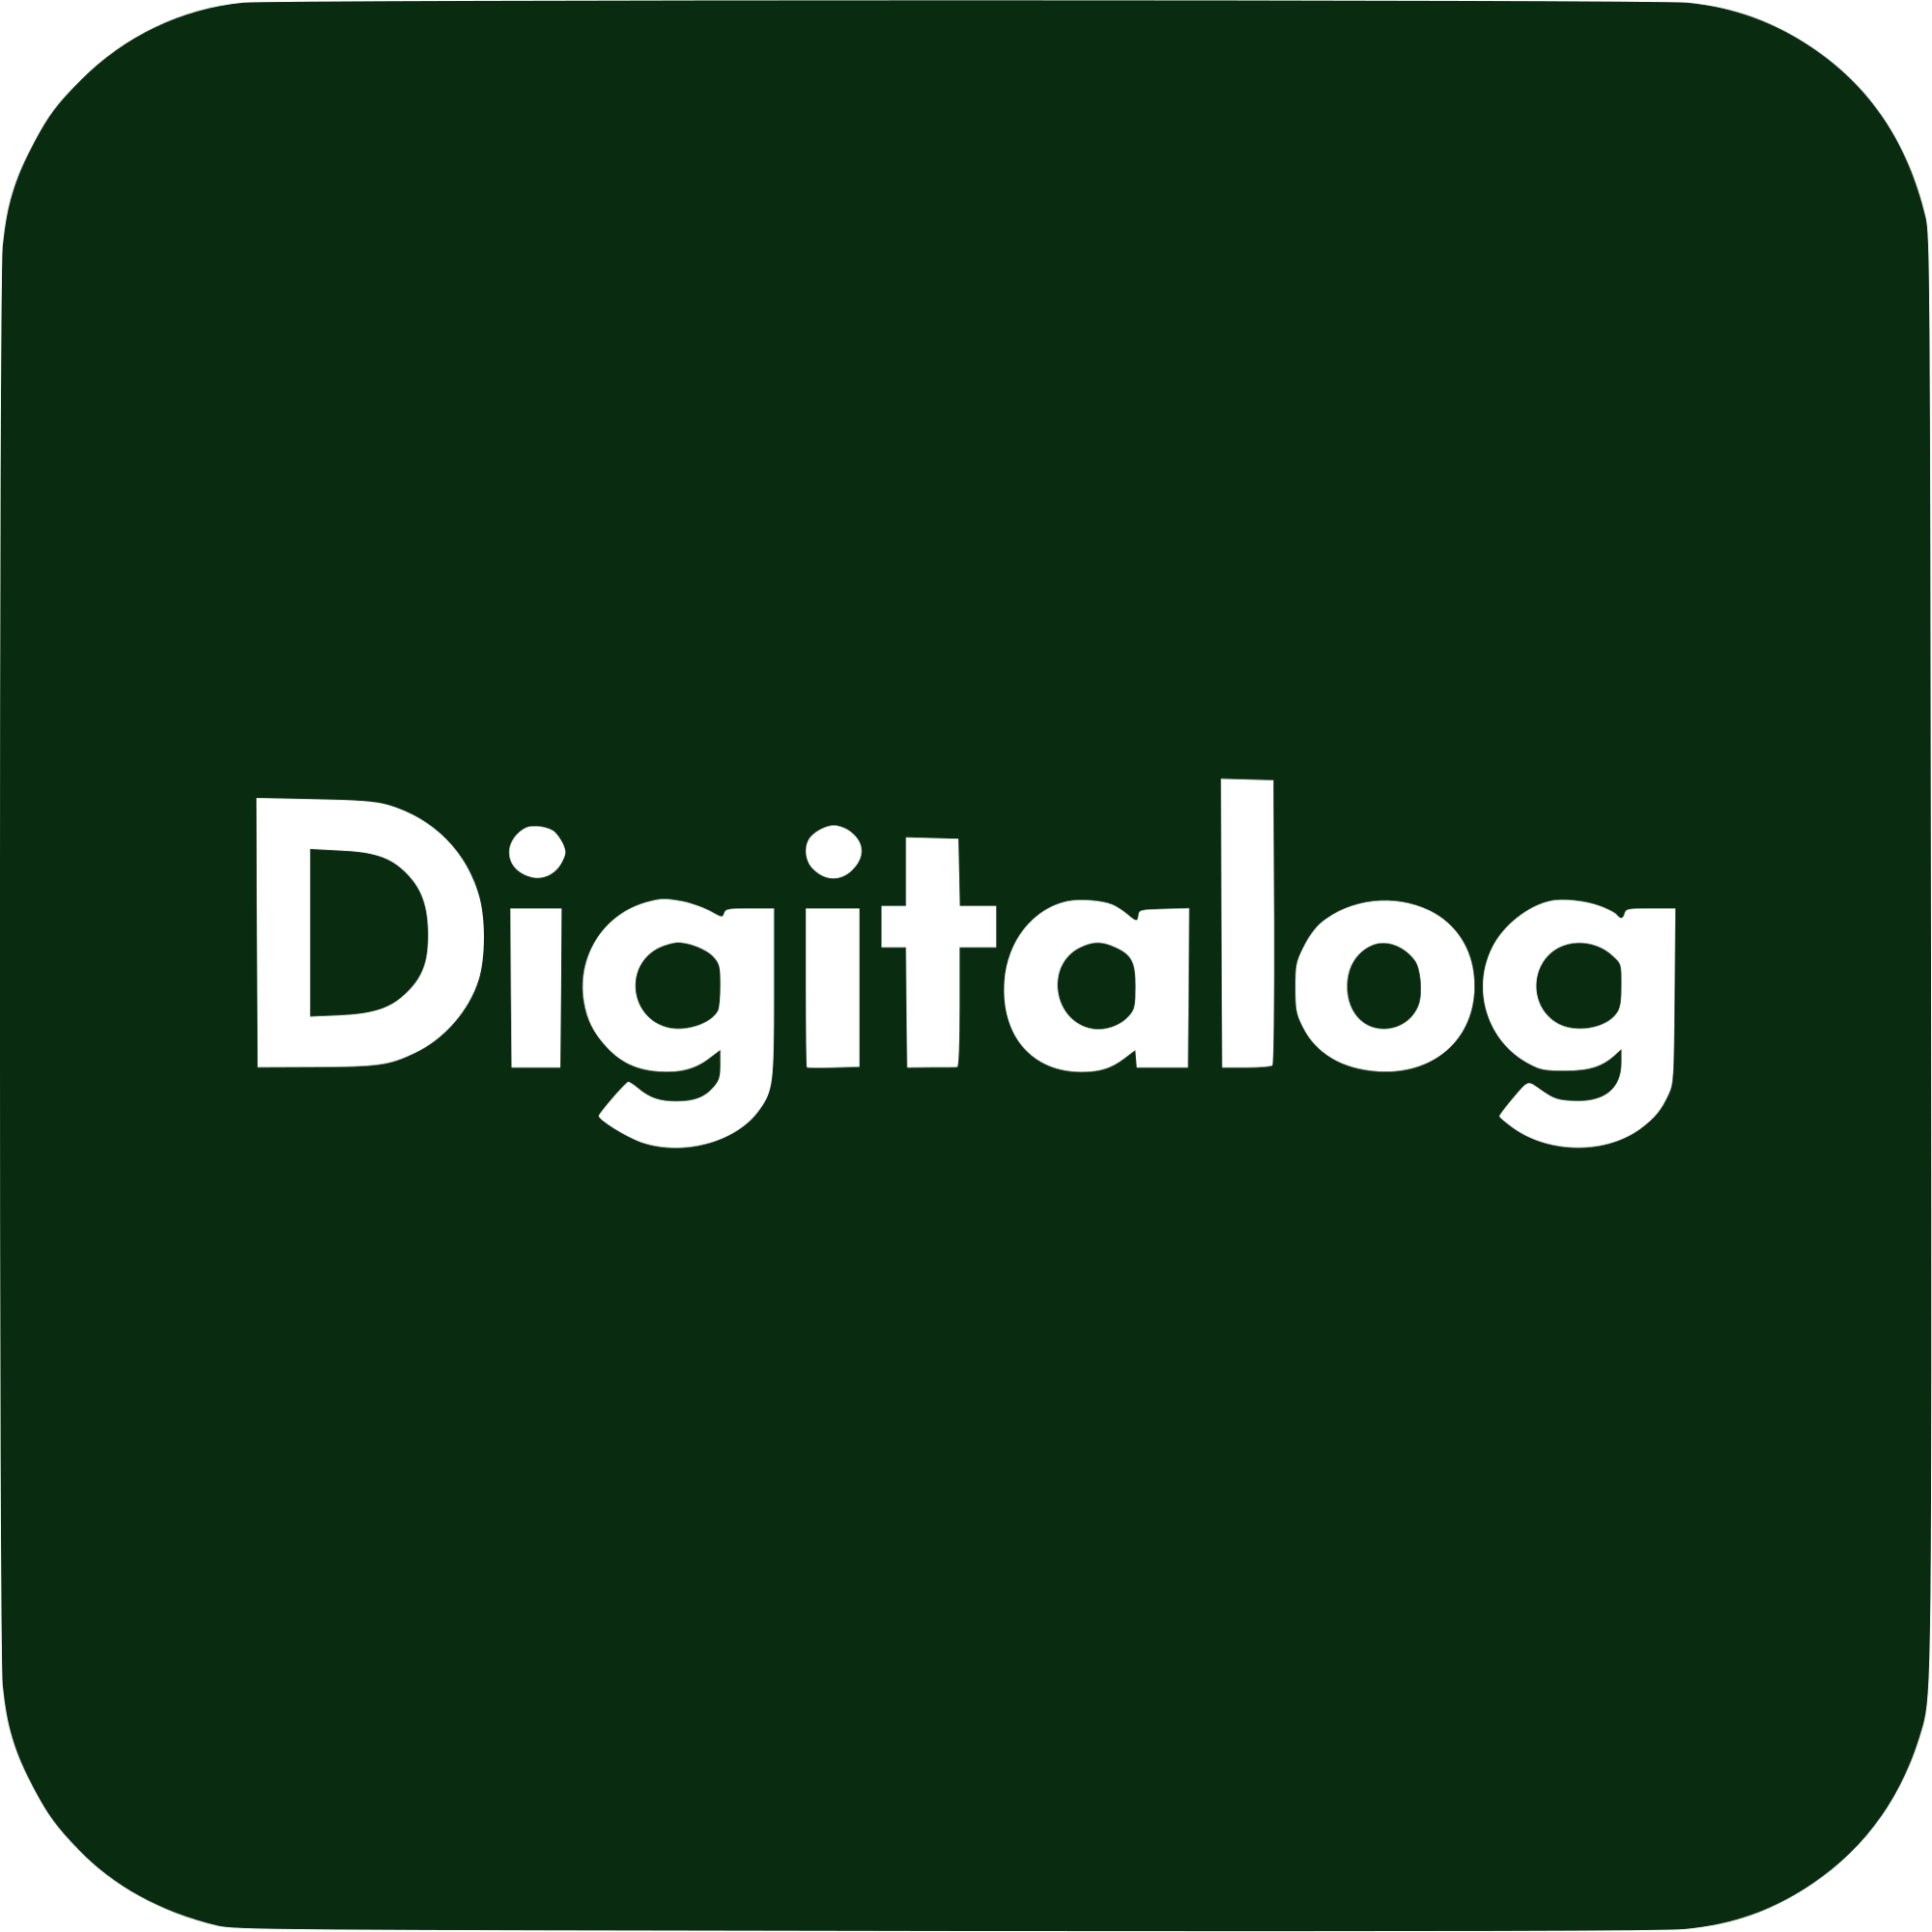 Digitalog Logo Transparent Picture